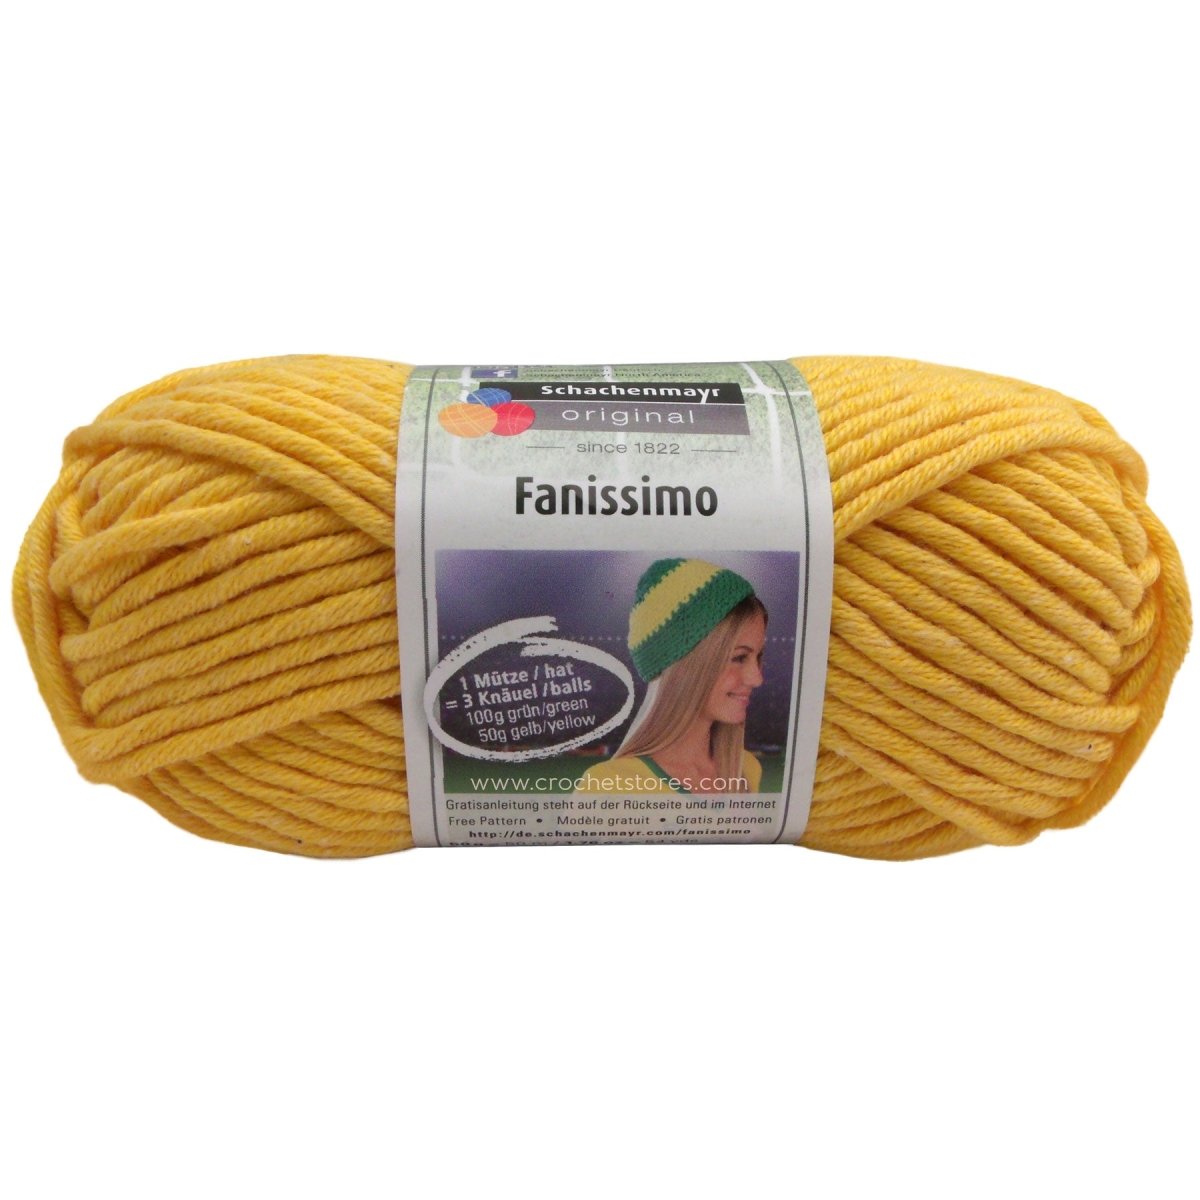 FANISSIMO - Crochetstores9807335-3214053859027878